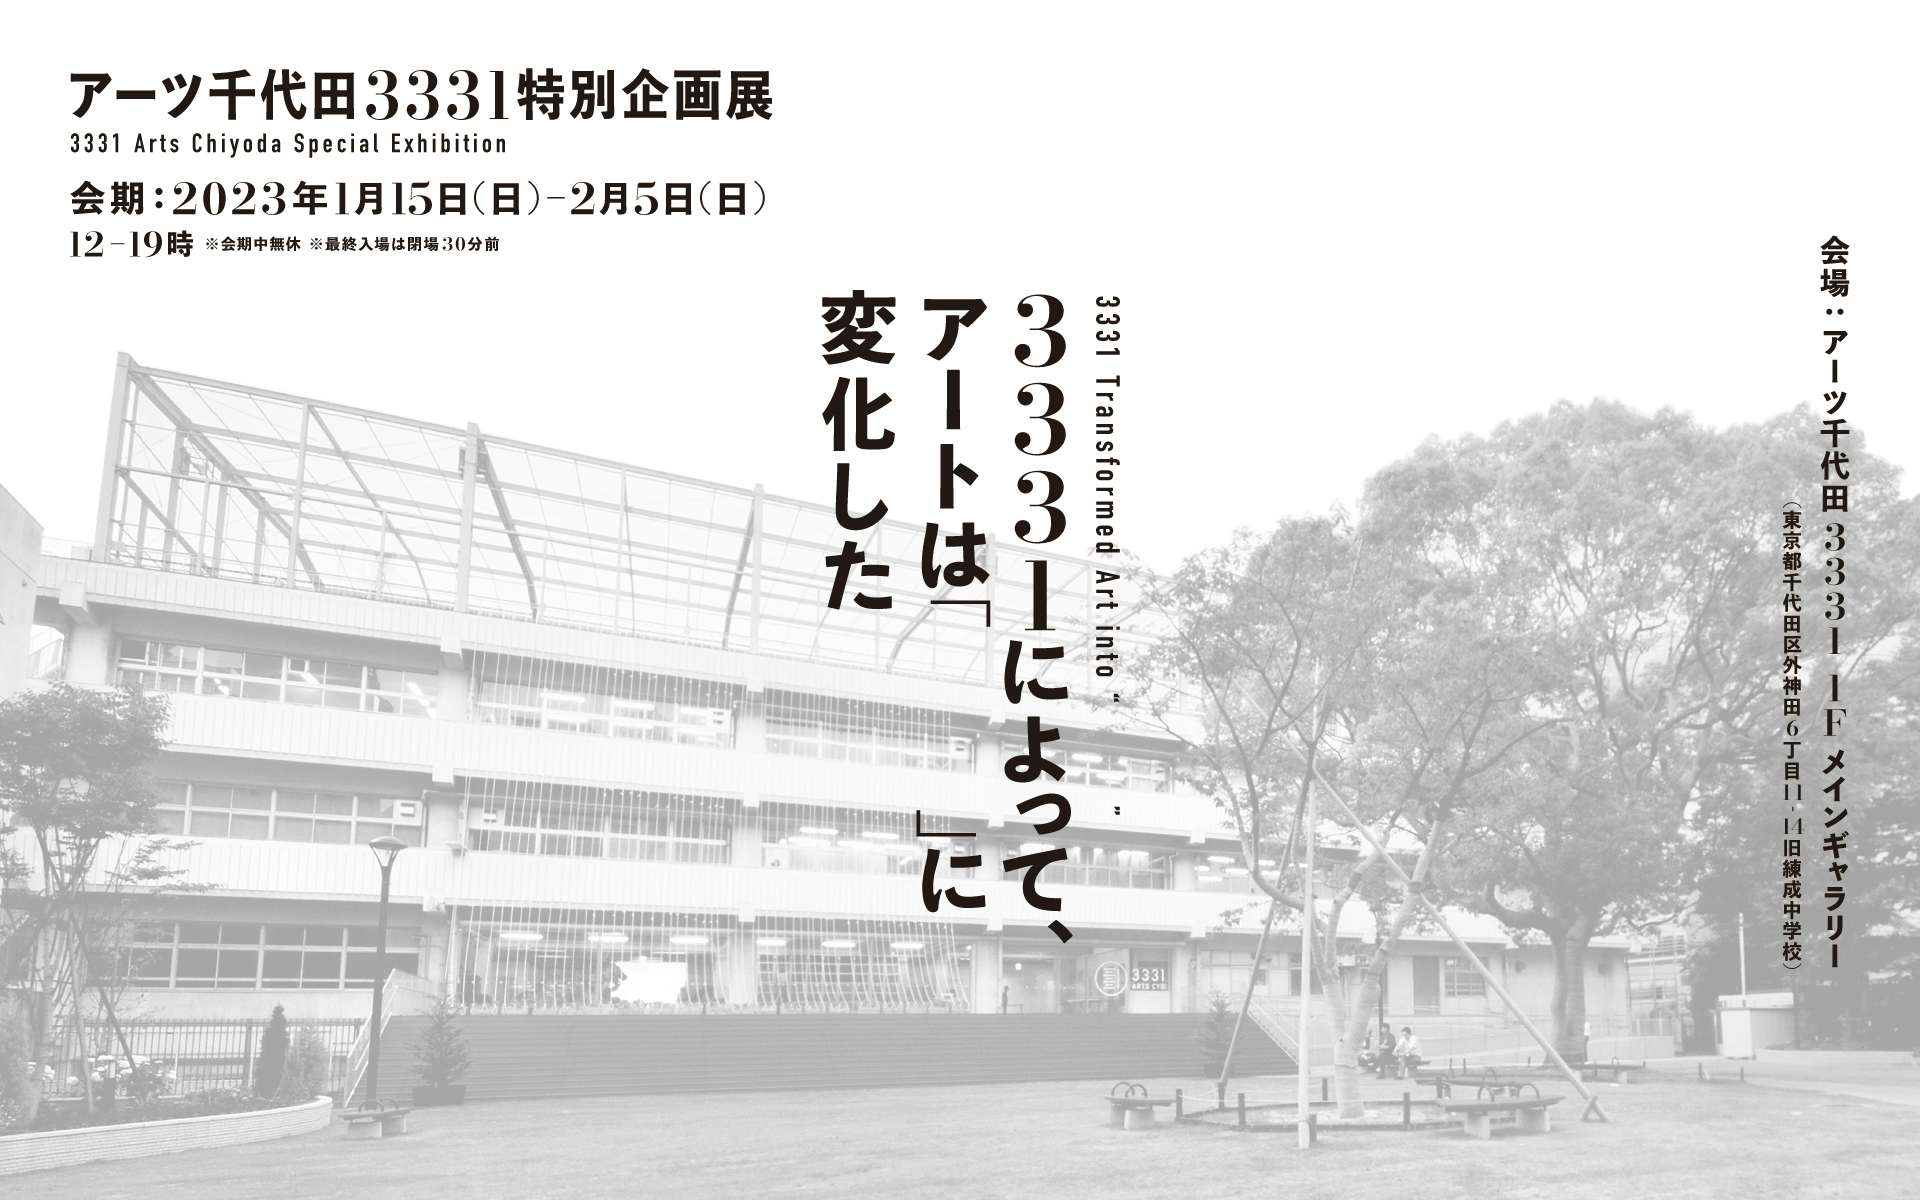 3331 Arts Chiyodaの最終企画展。「3331によって、アートは『 』に変化 